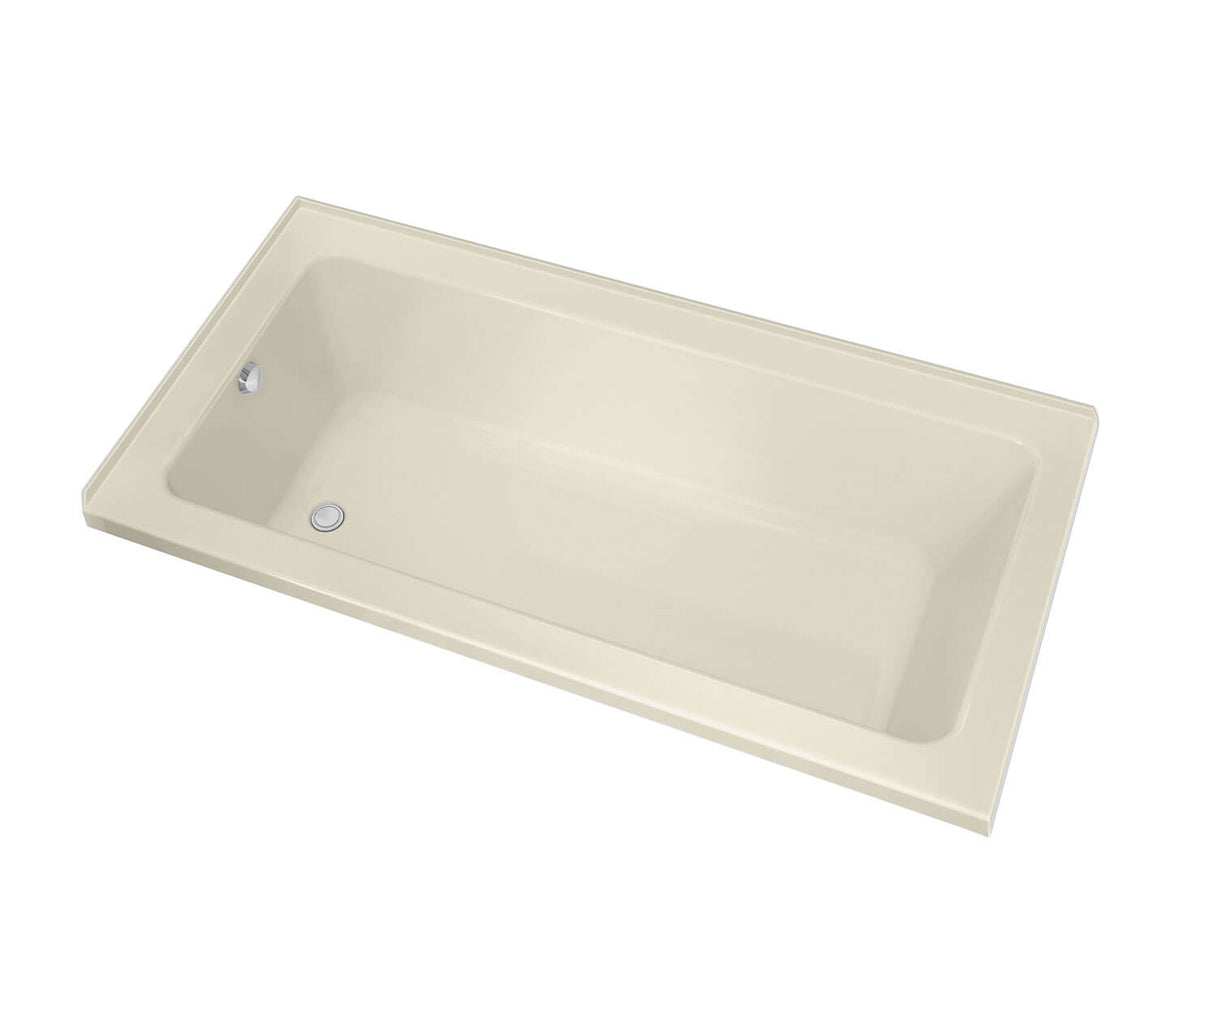 MAAX 106202-L-097-004 Pose 6032 IF Acrylic Corner Left Left-Hand Drain Combined Whirlpool & Aeroeffect Bathtub in Bone